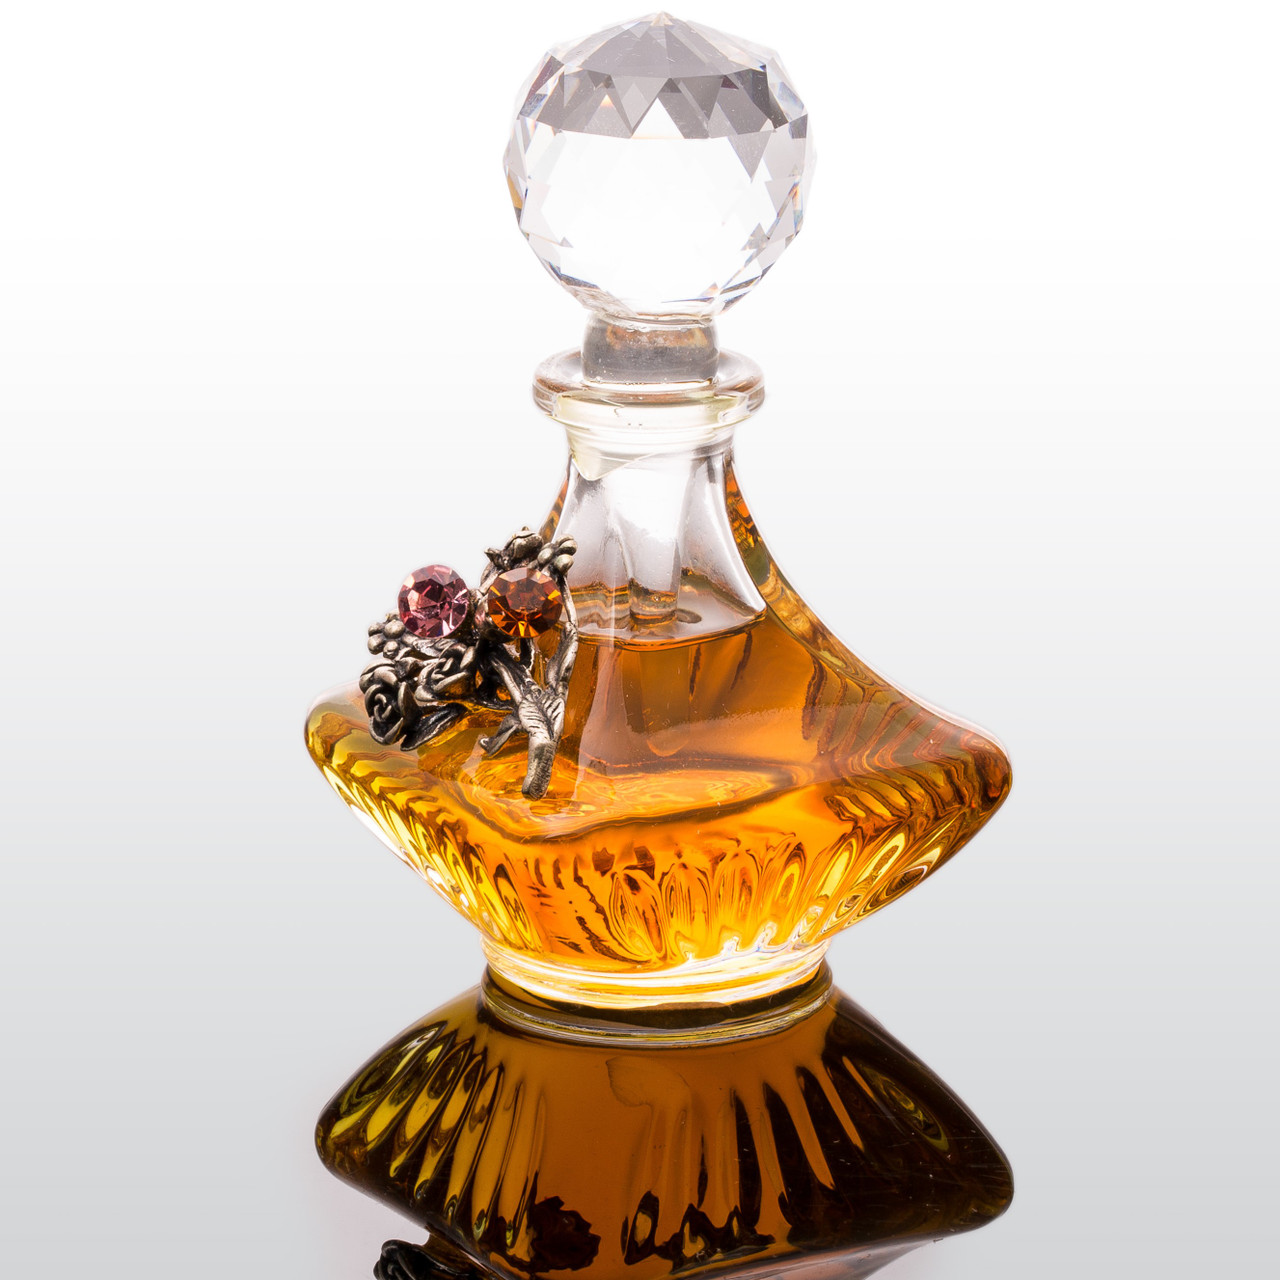 Home Fragrance Oil, 2 Set Jasmine, Oud Essential